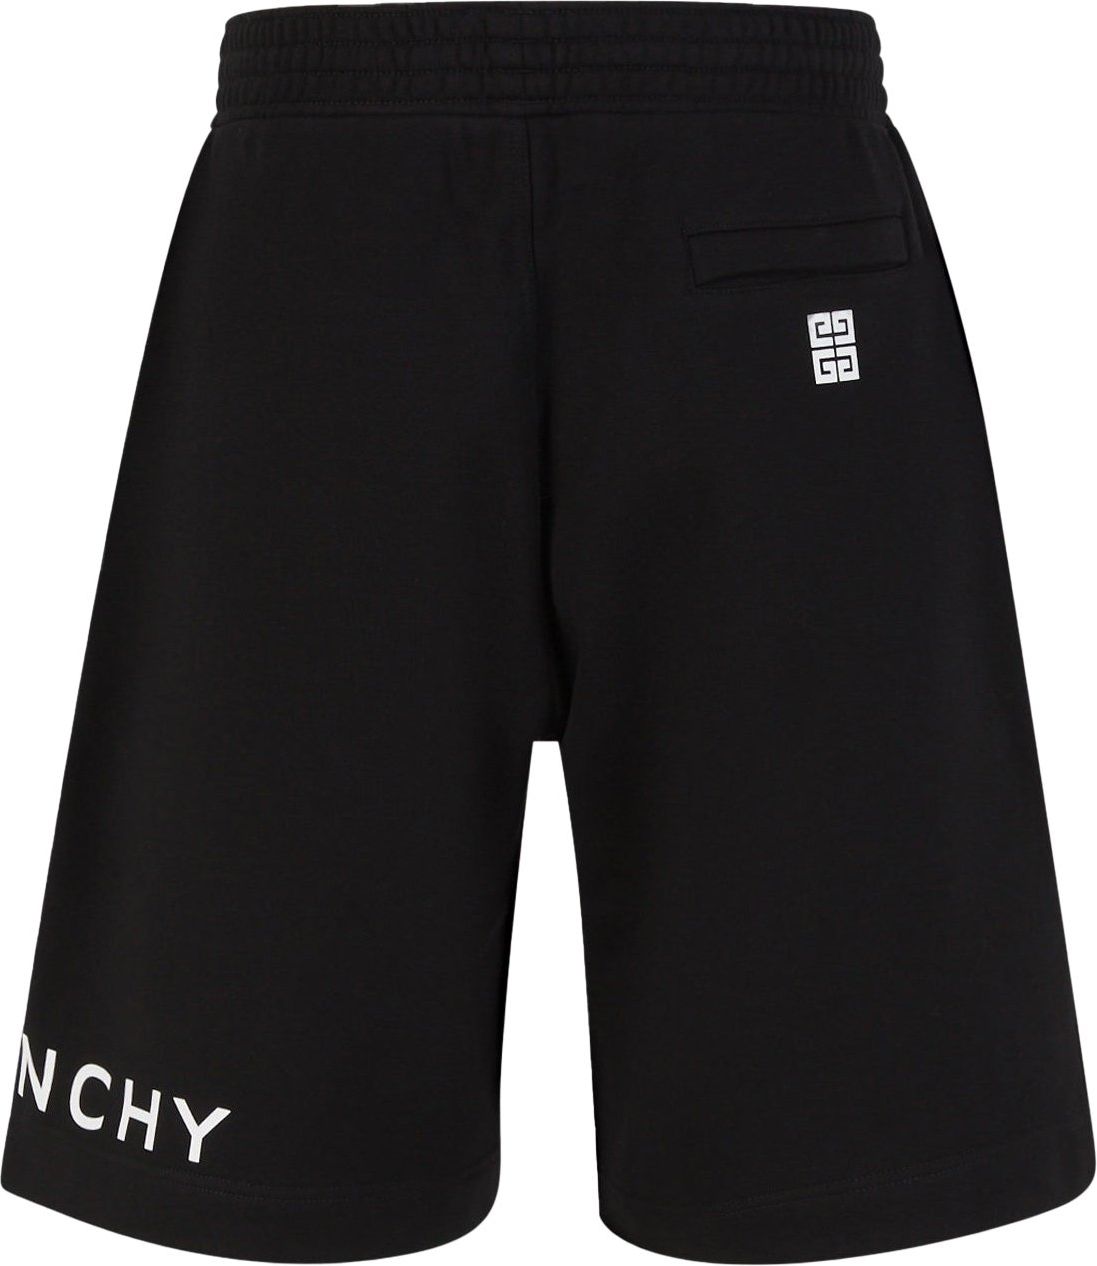 Givenchy Logo Cotton Bermuda Shorts Zwart